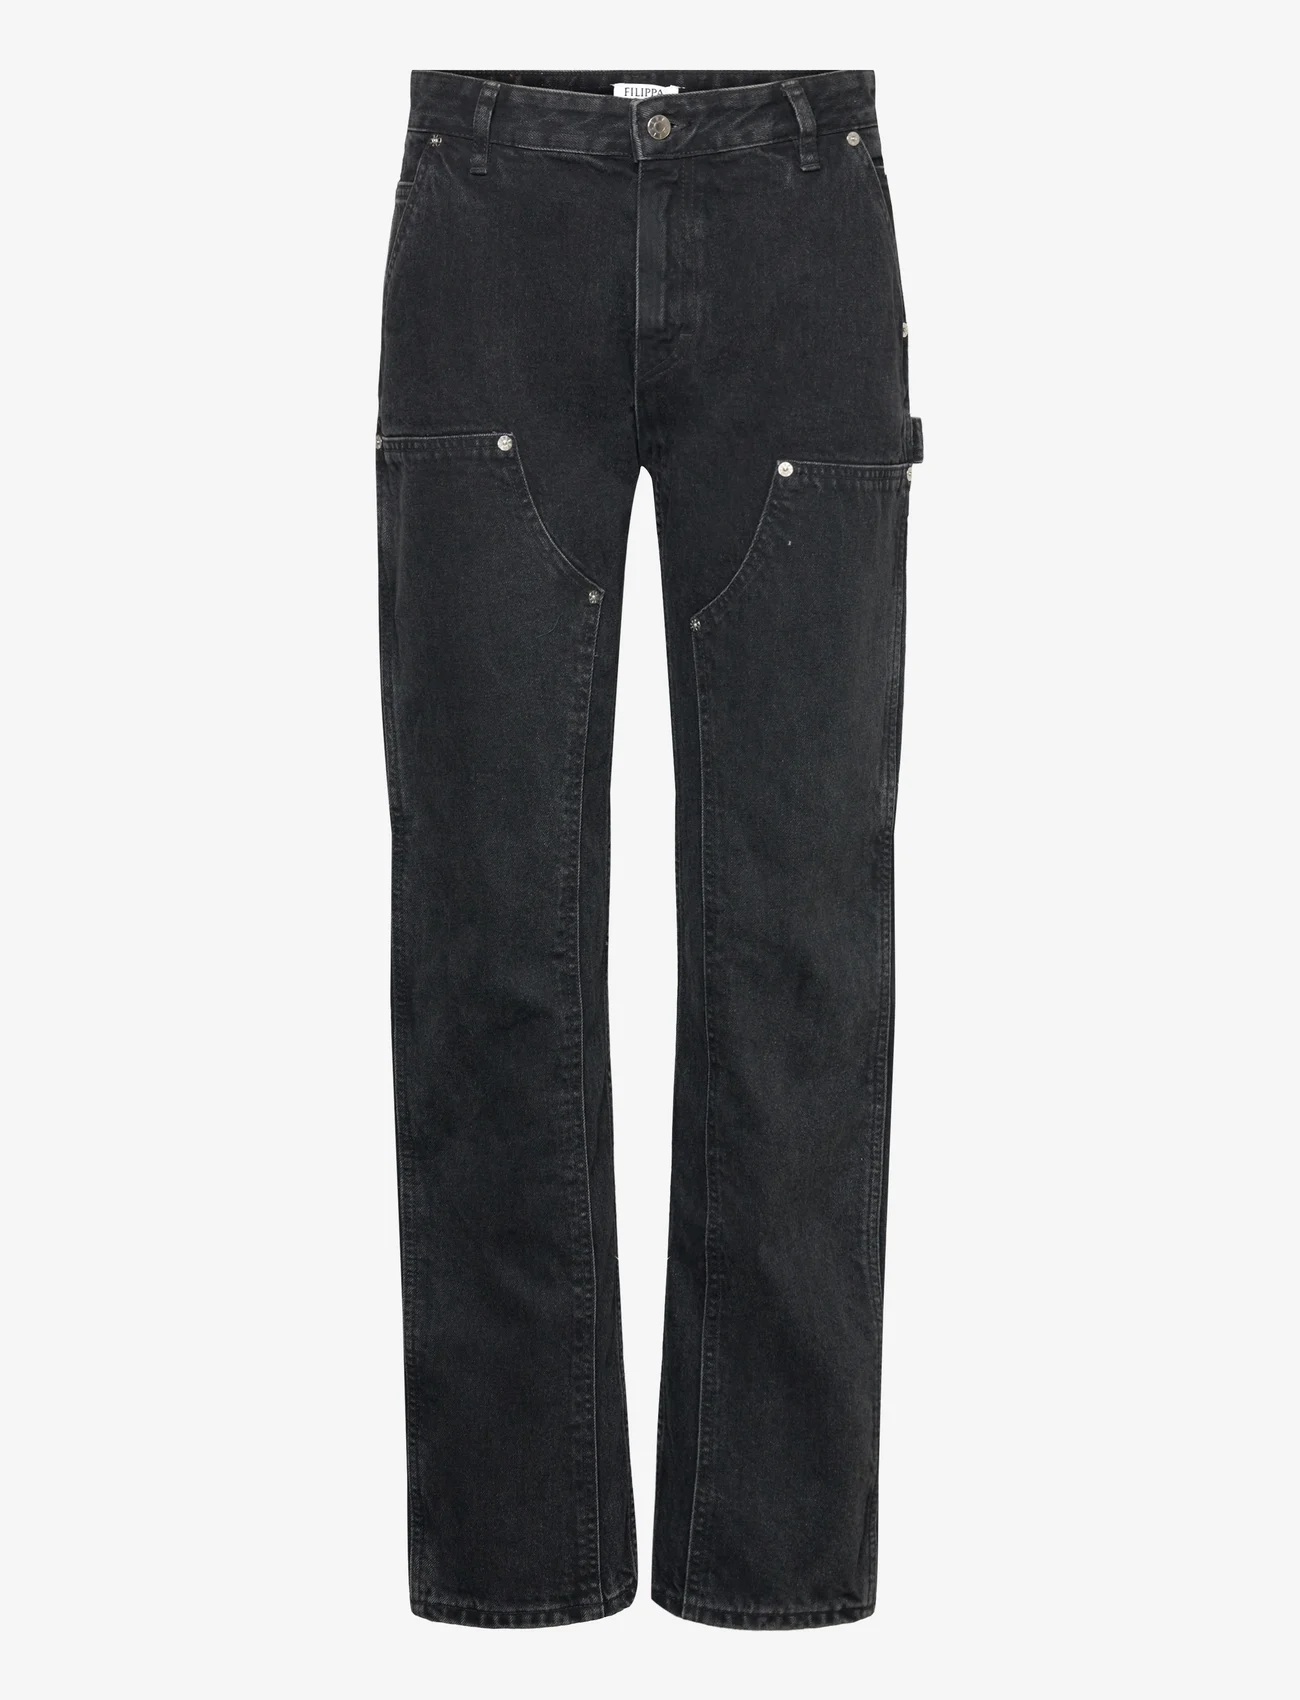 Filippa K - Carpenter Jeans - raka jeans - charcoal b - 0